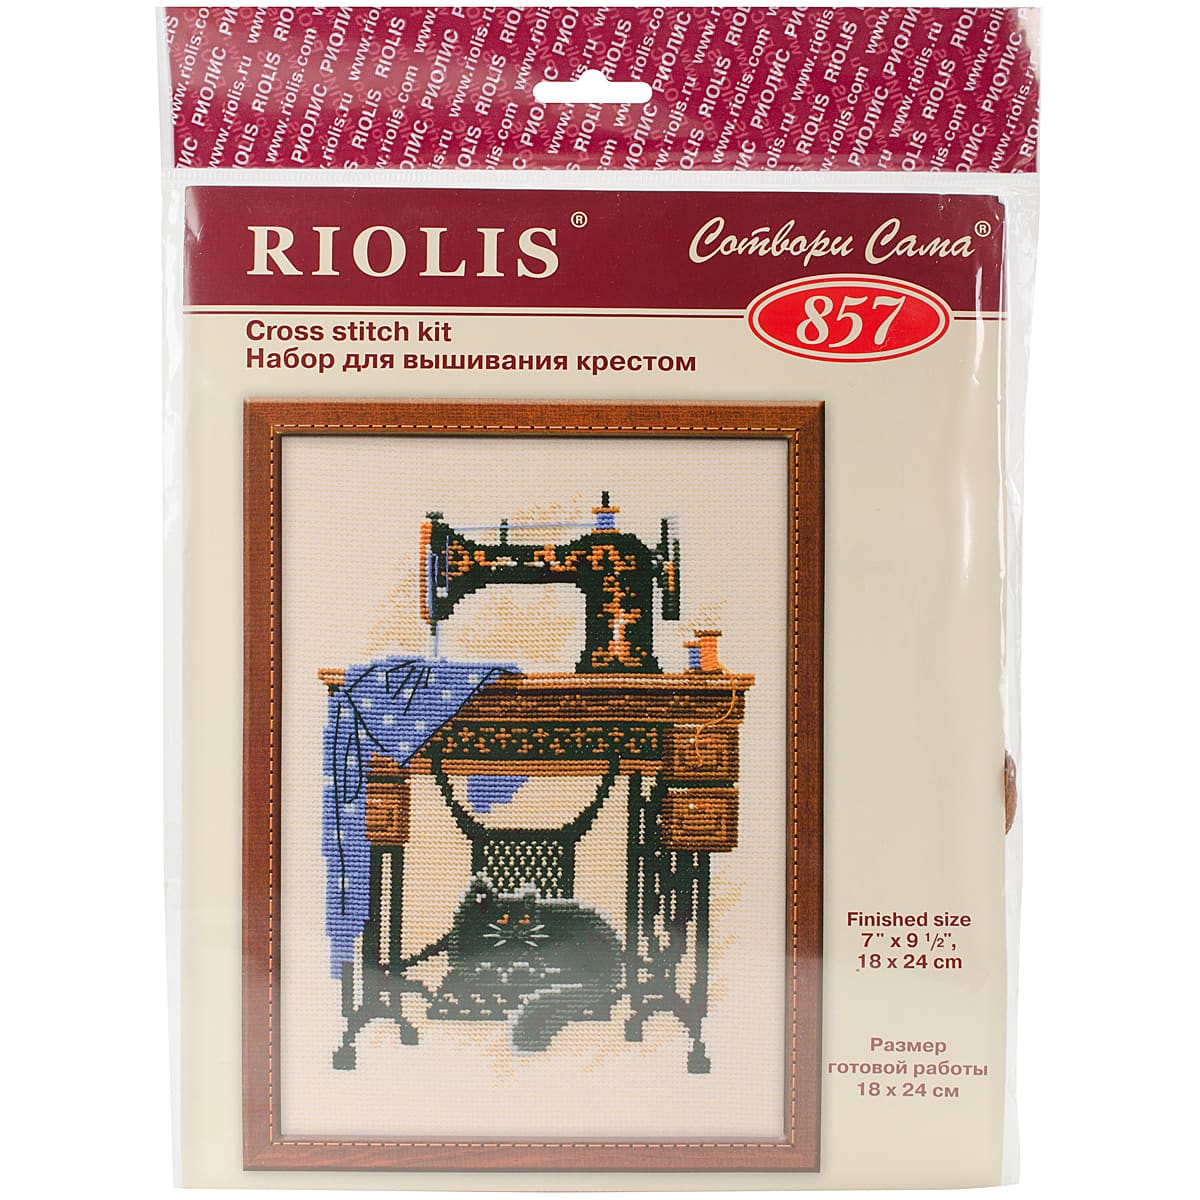 RIOLIS Cat With Sewing Machine Cross Stitch Kit